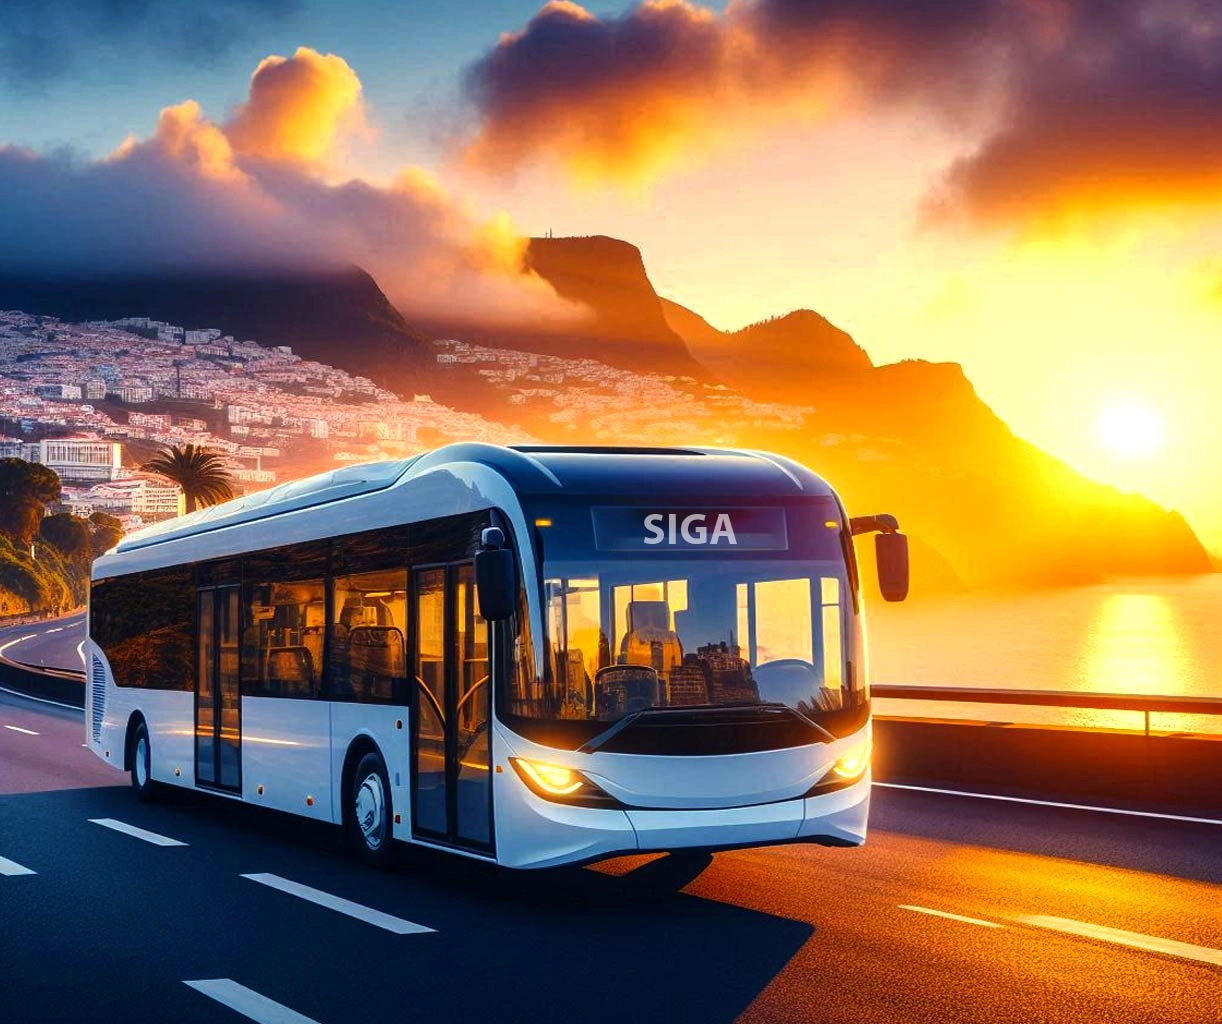 SIGA: The New Era of Public Transportation in Madeira?